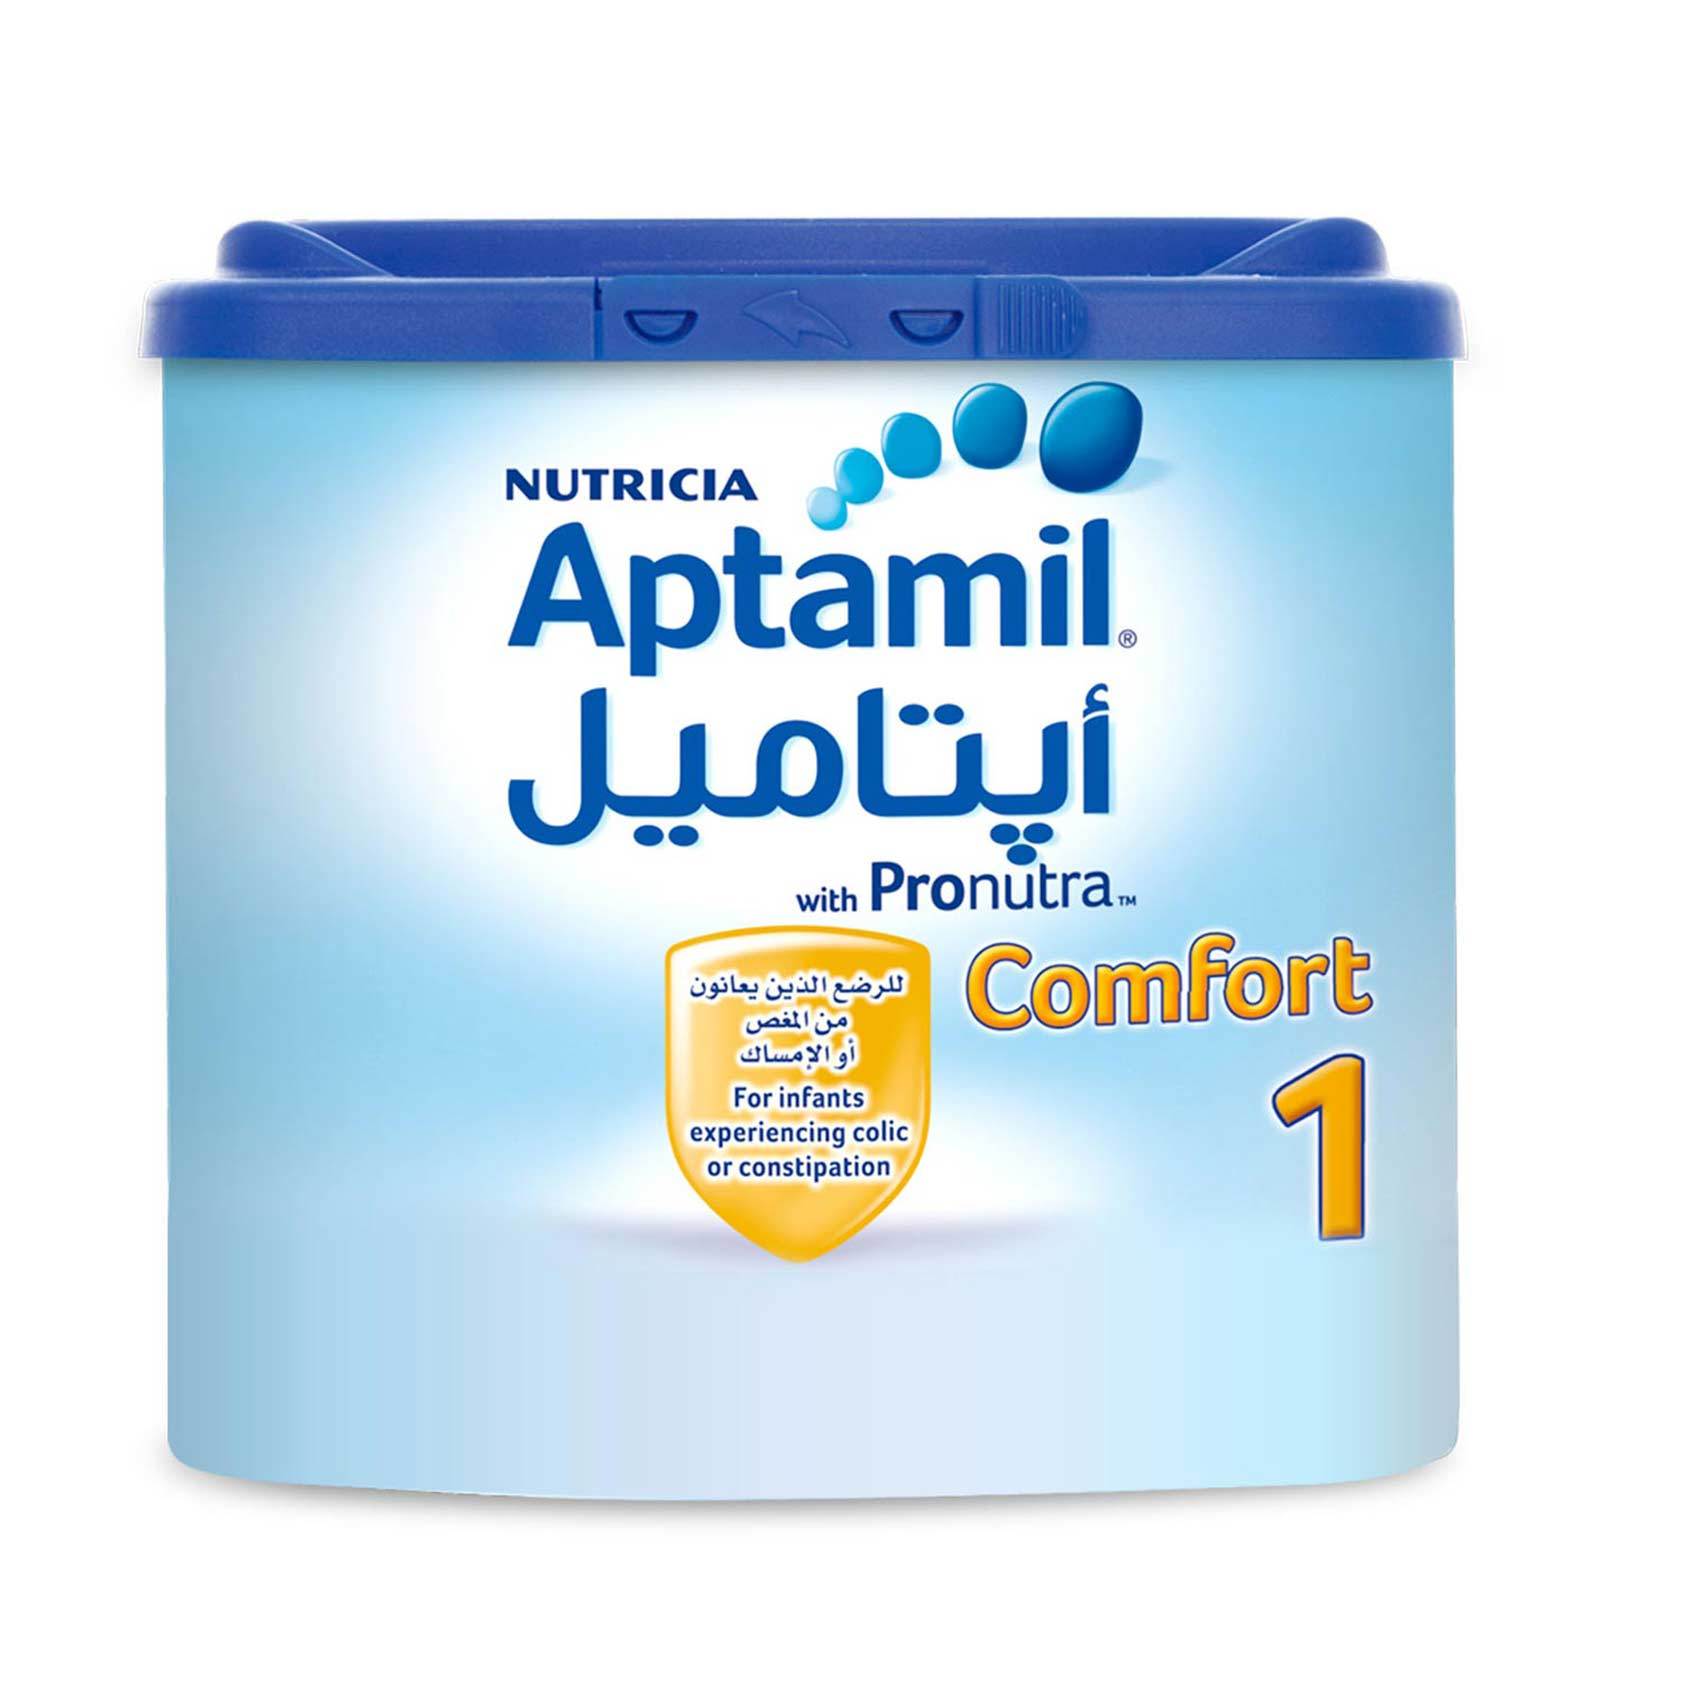 aptamil colic and constipation